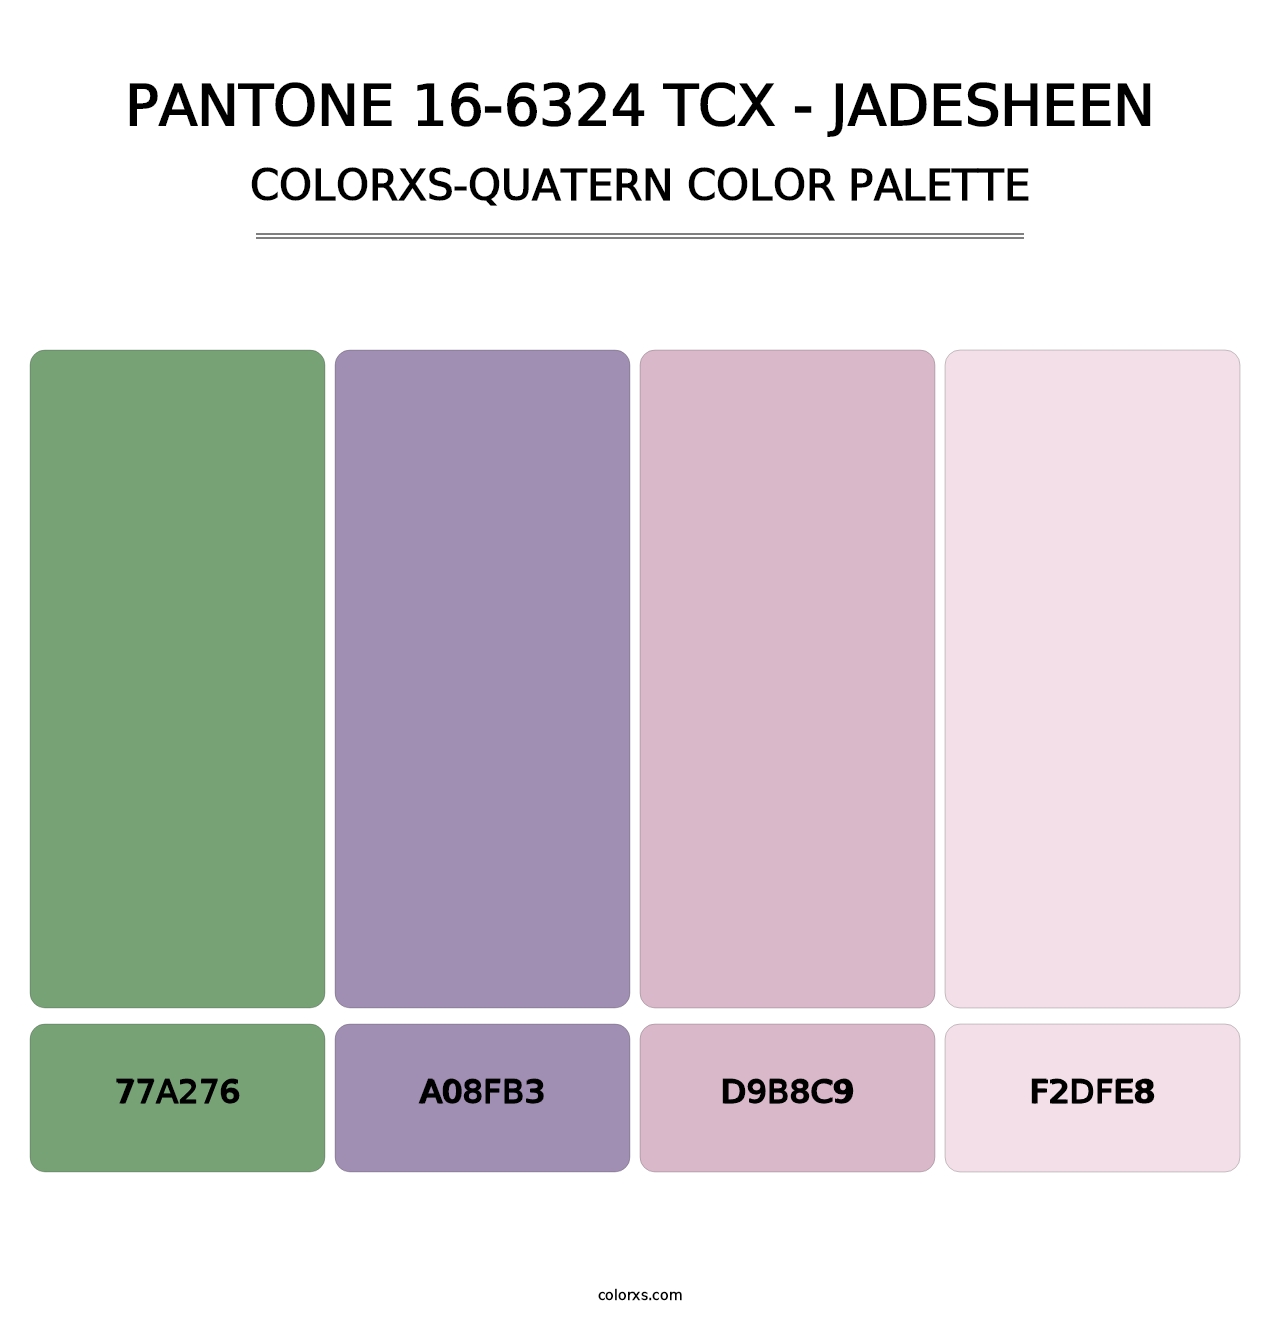 PANTONE 16-6324 TCX - Jadesheen - Colorxs Quatern Palette